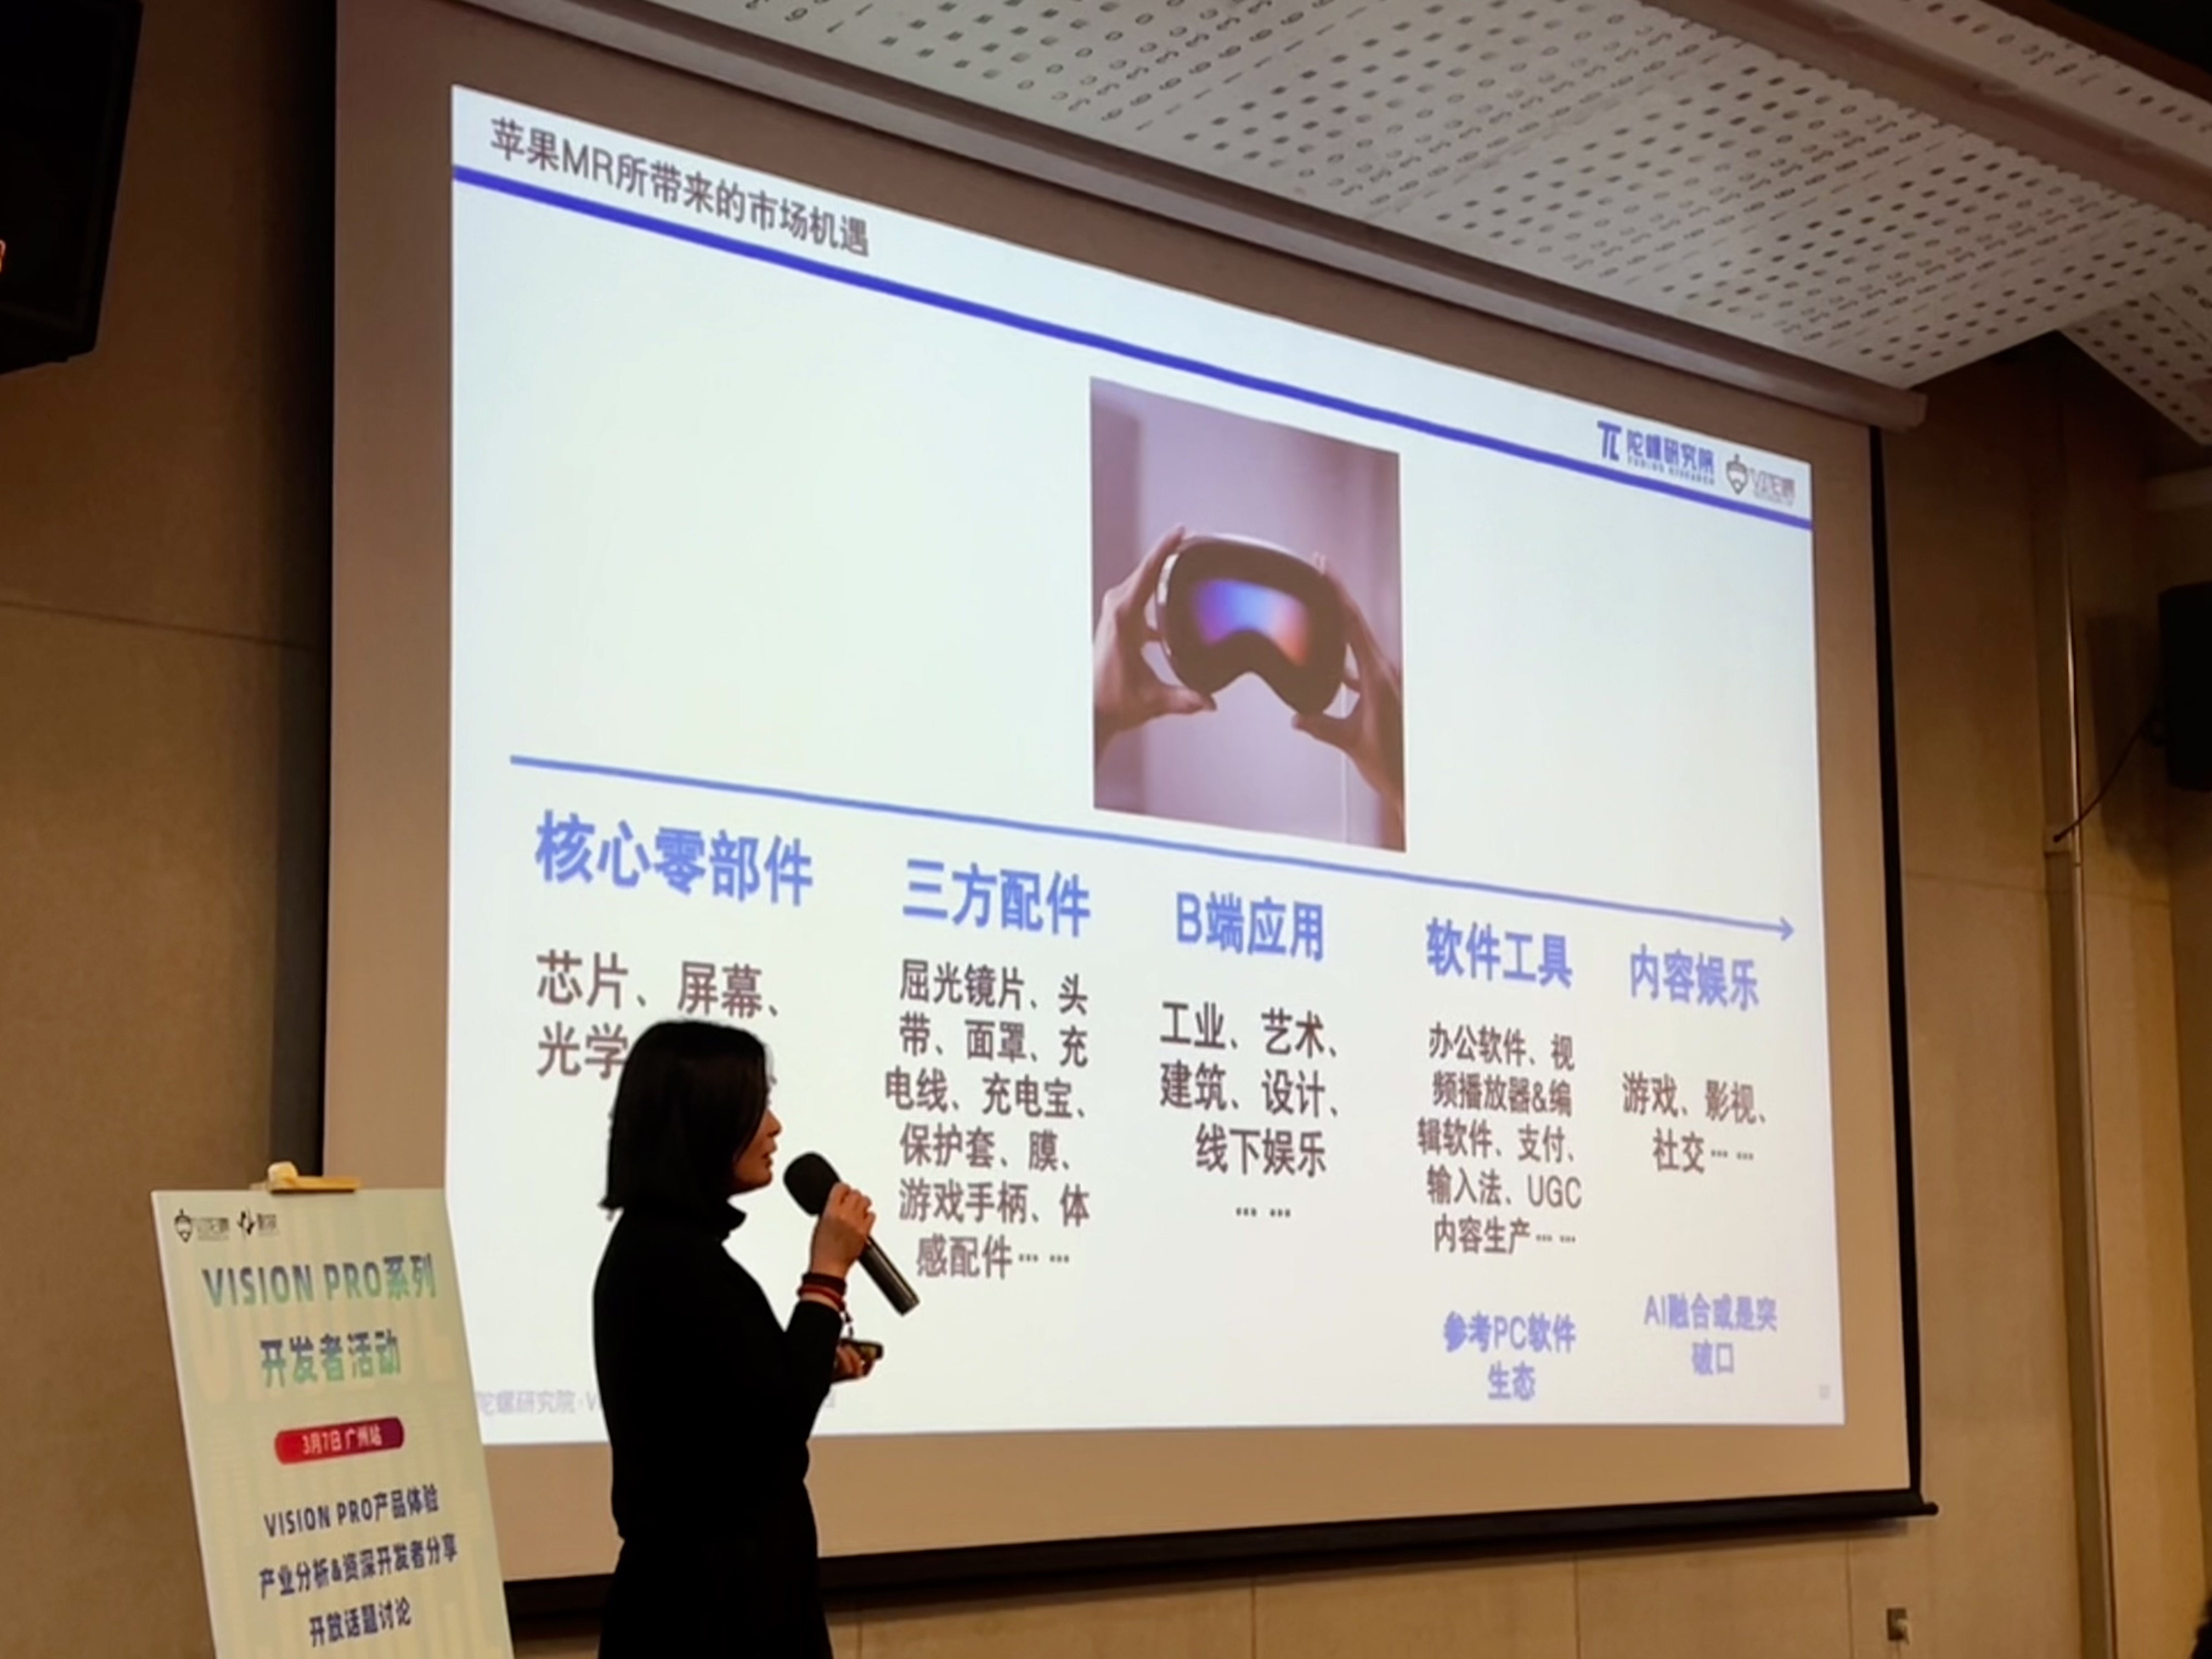 VR陀螺联合影核探索新平台新机遇：Vision Pro系列开发者活动•广州站圆满结束